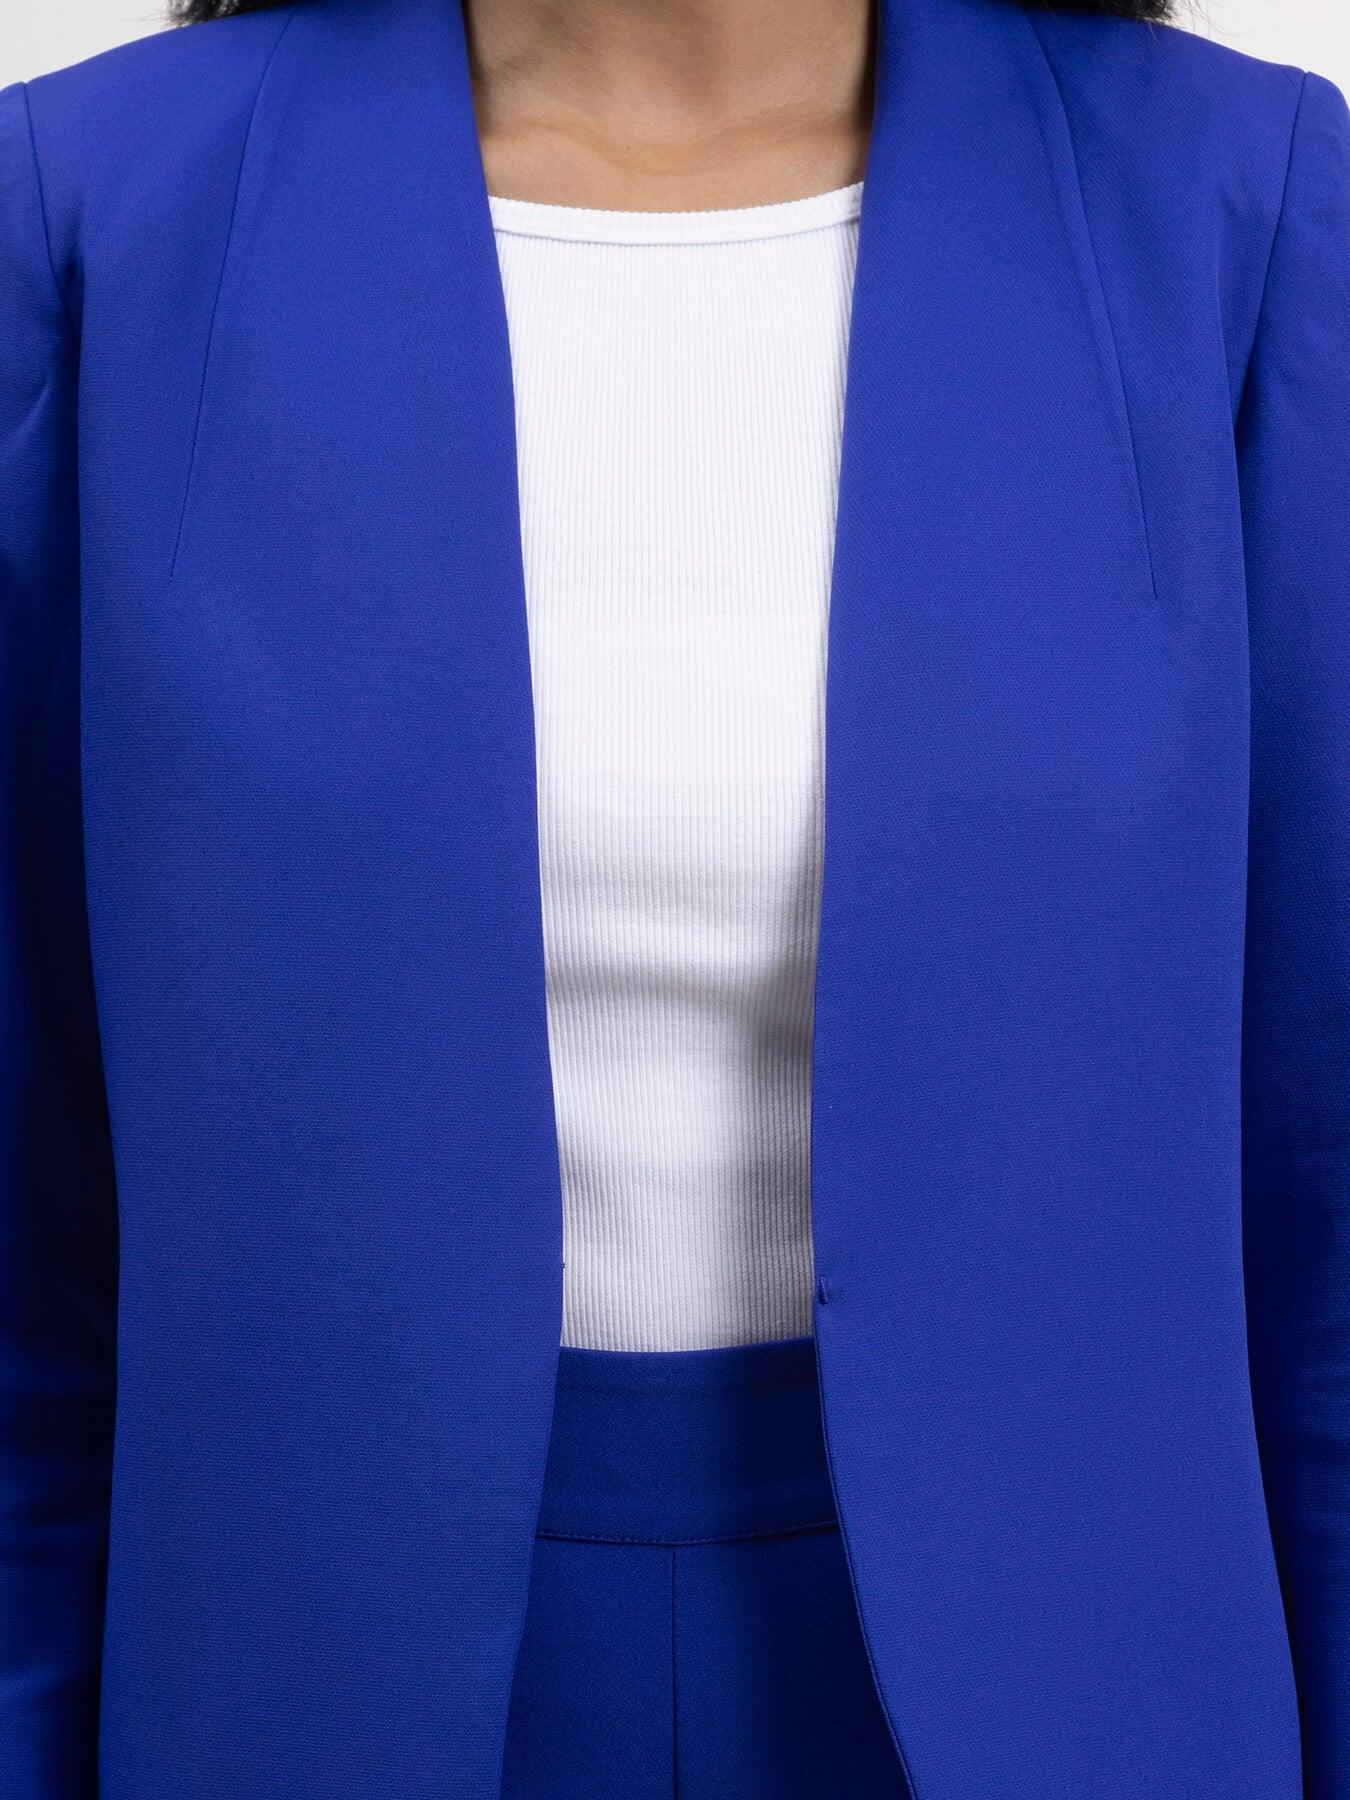 Open Front Blazer - Royal Blue| Formal Jackets